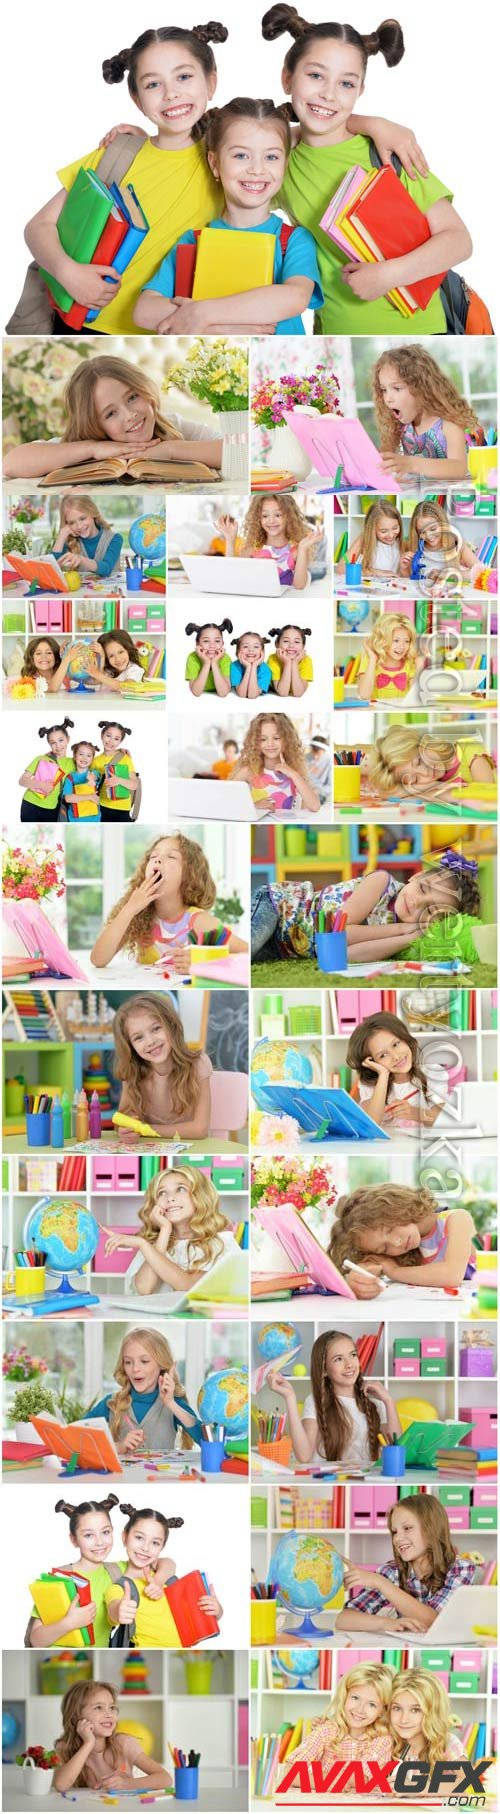 Children with books stock photo